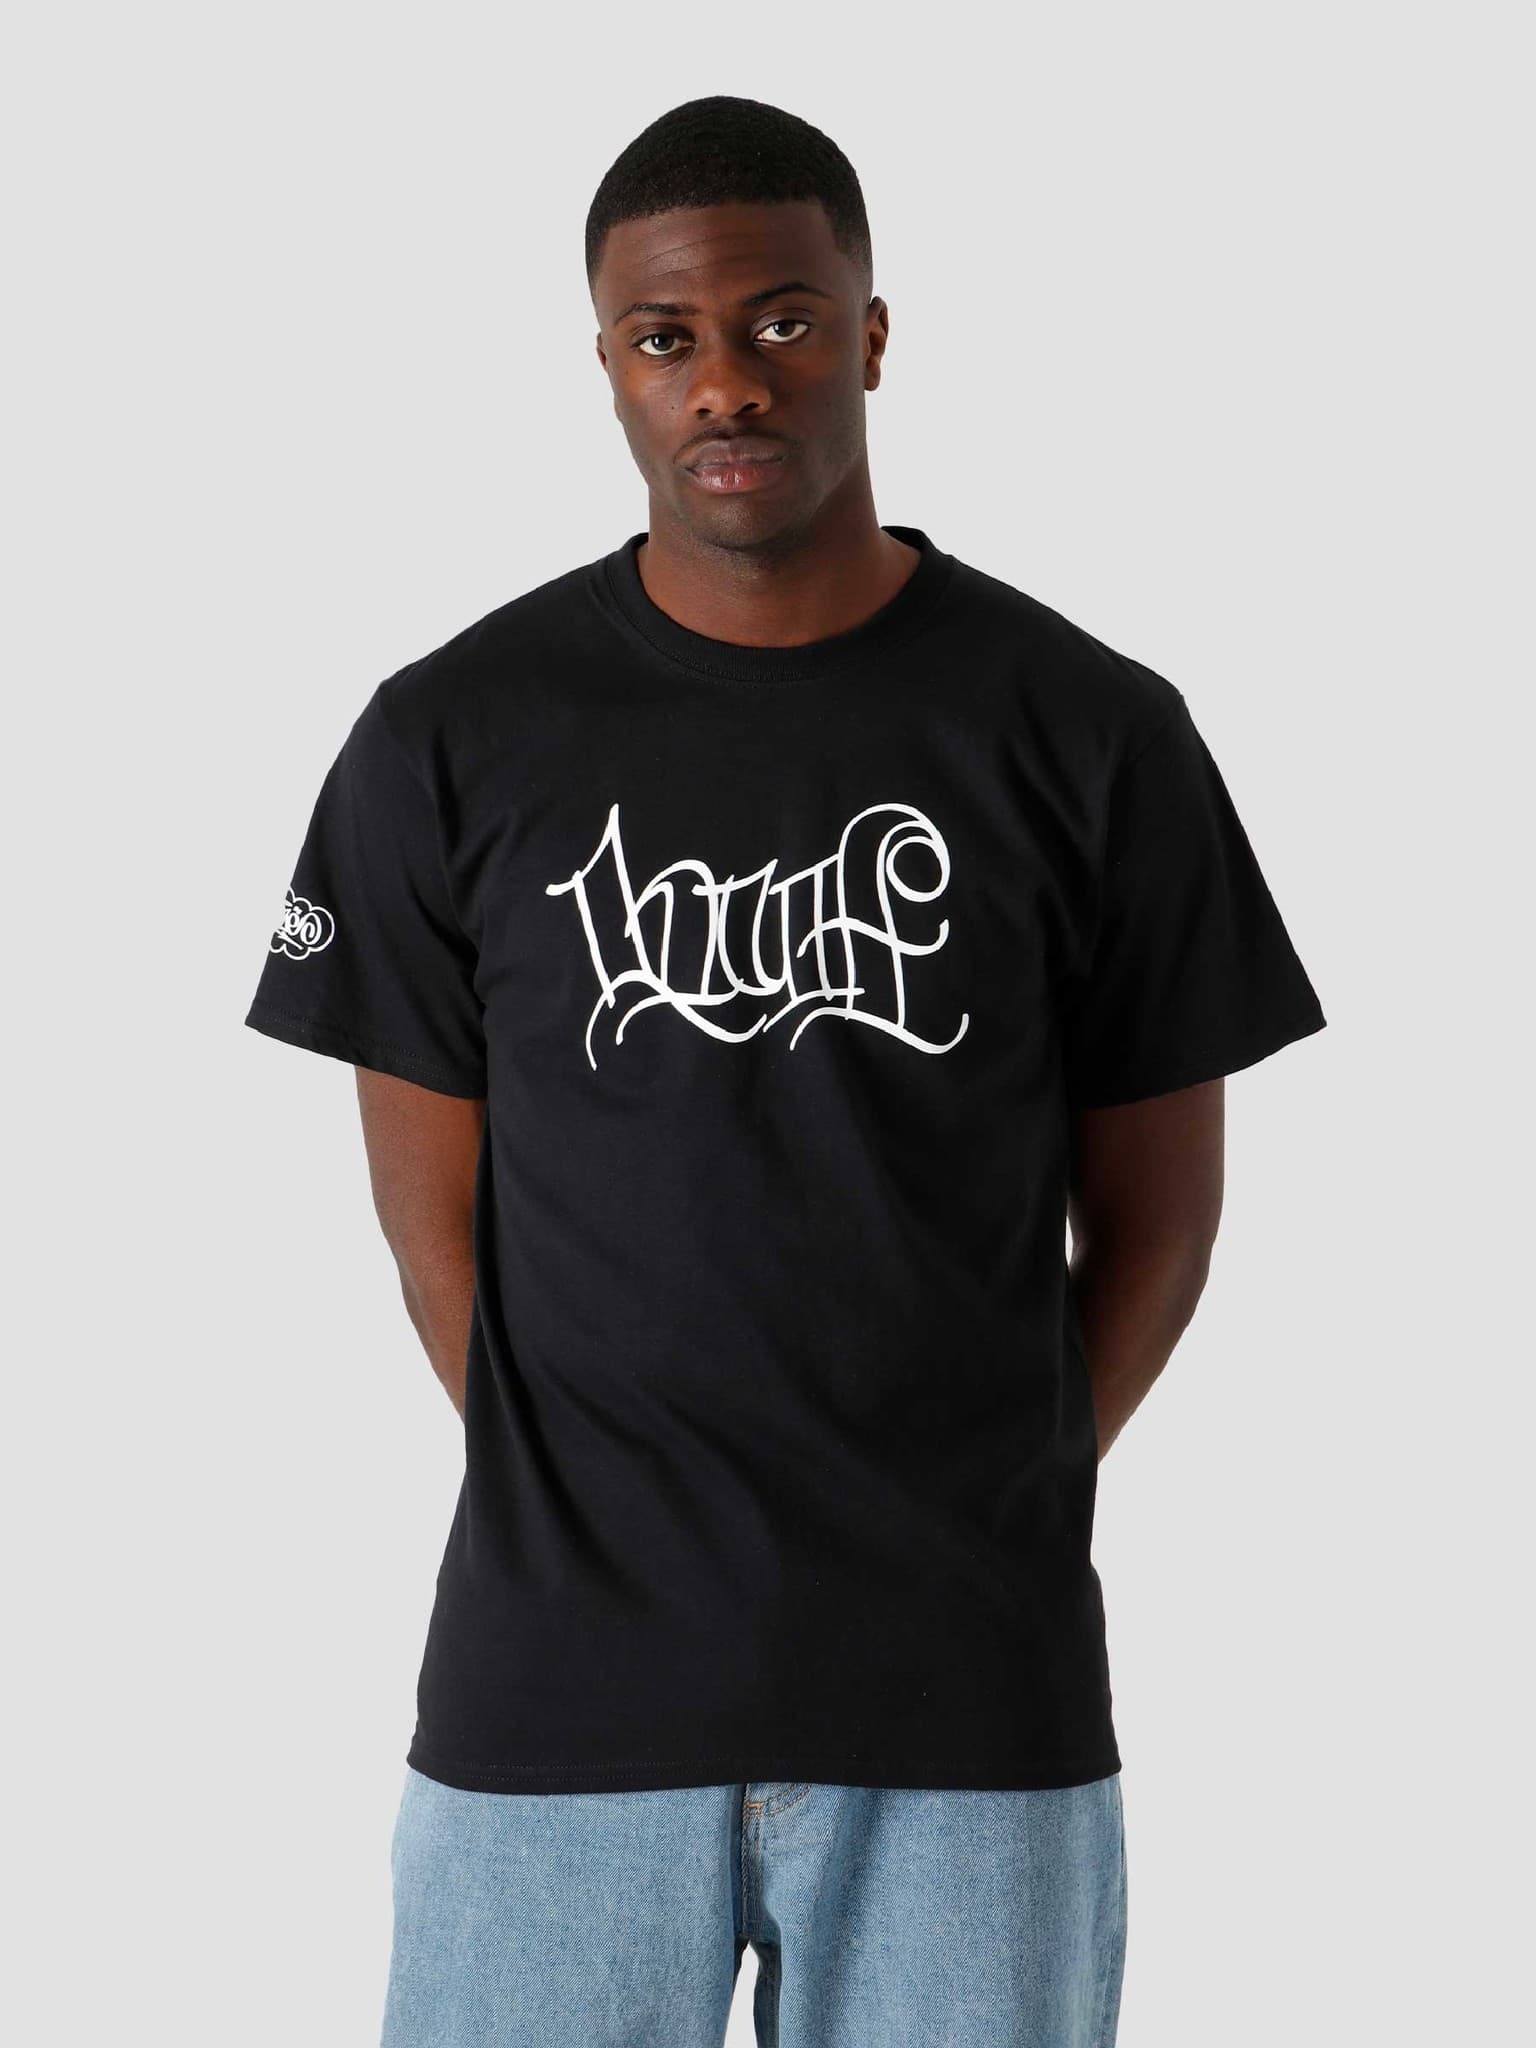 Haze Handstyle 2 T-Shirt Black TS01382